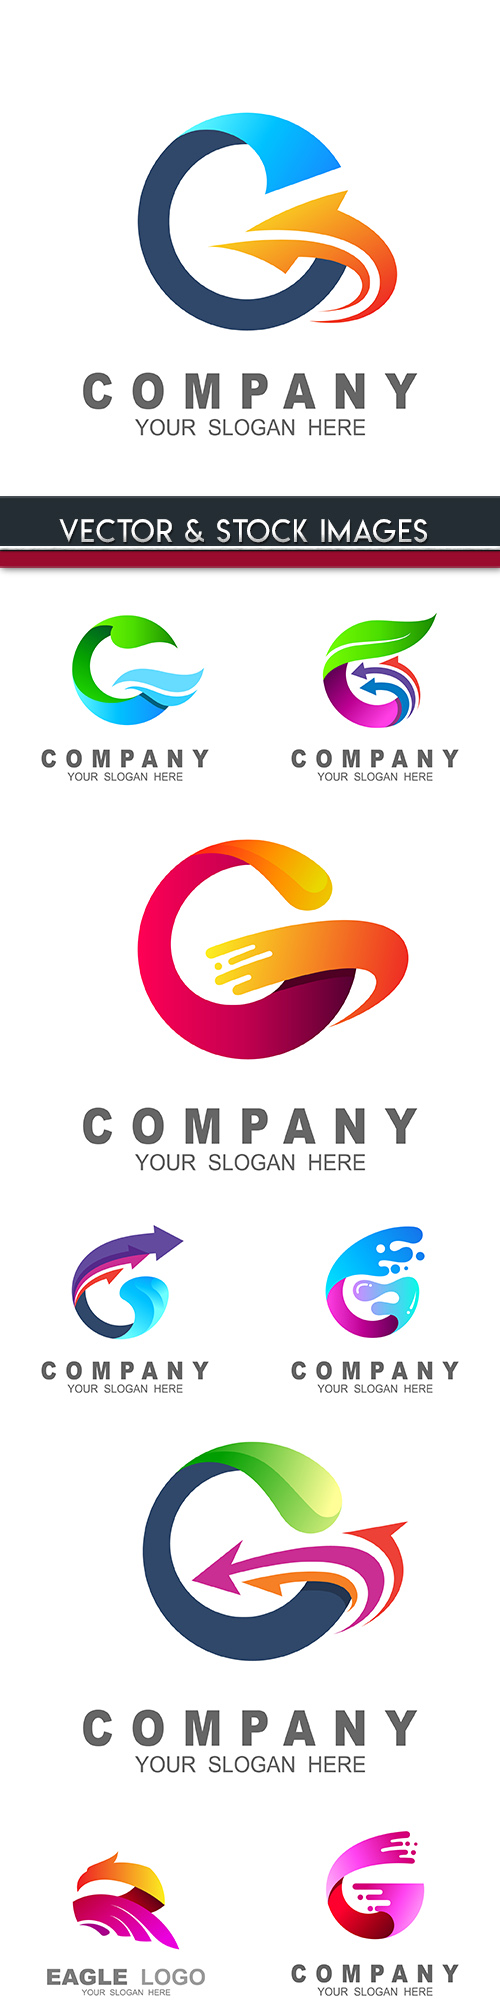 Creative business logos company design 28